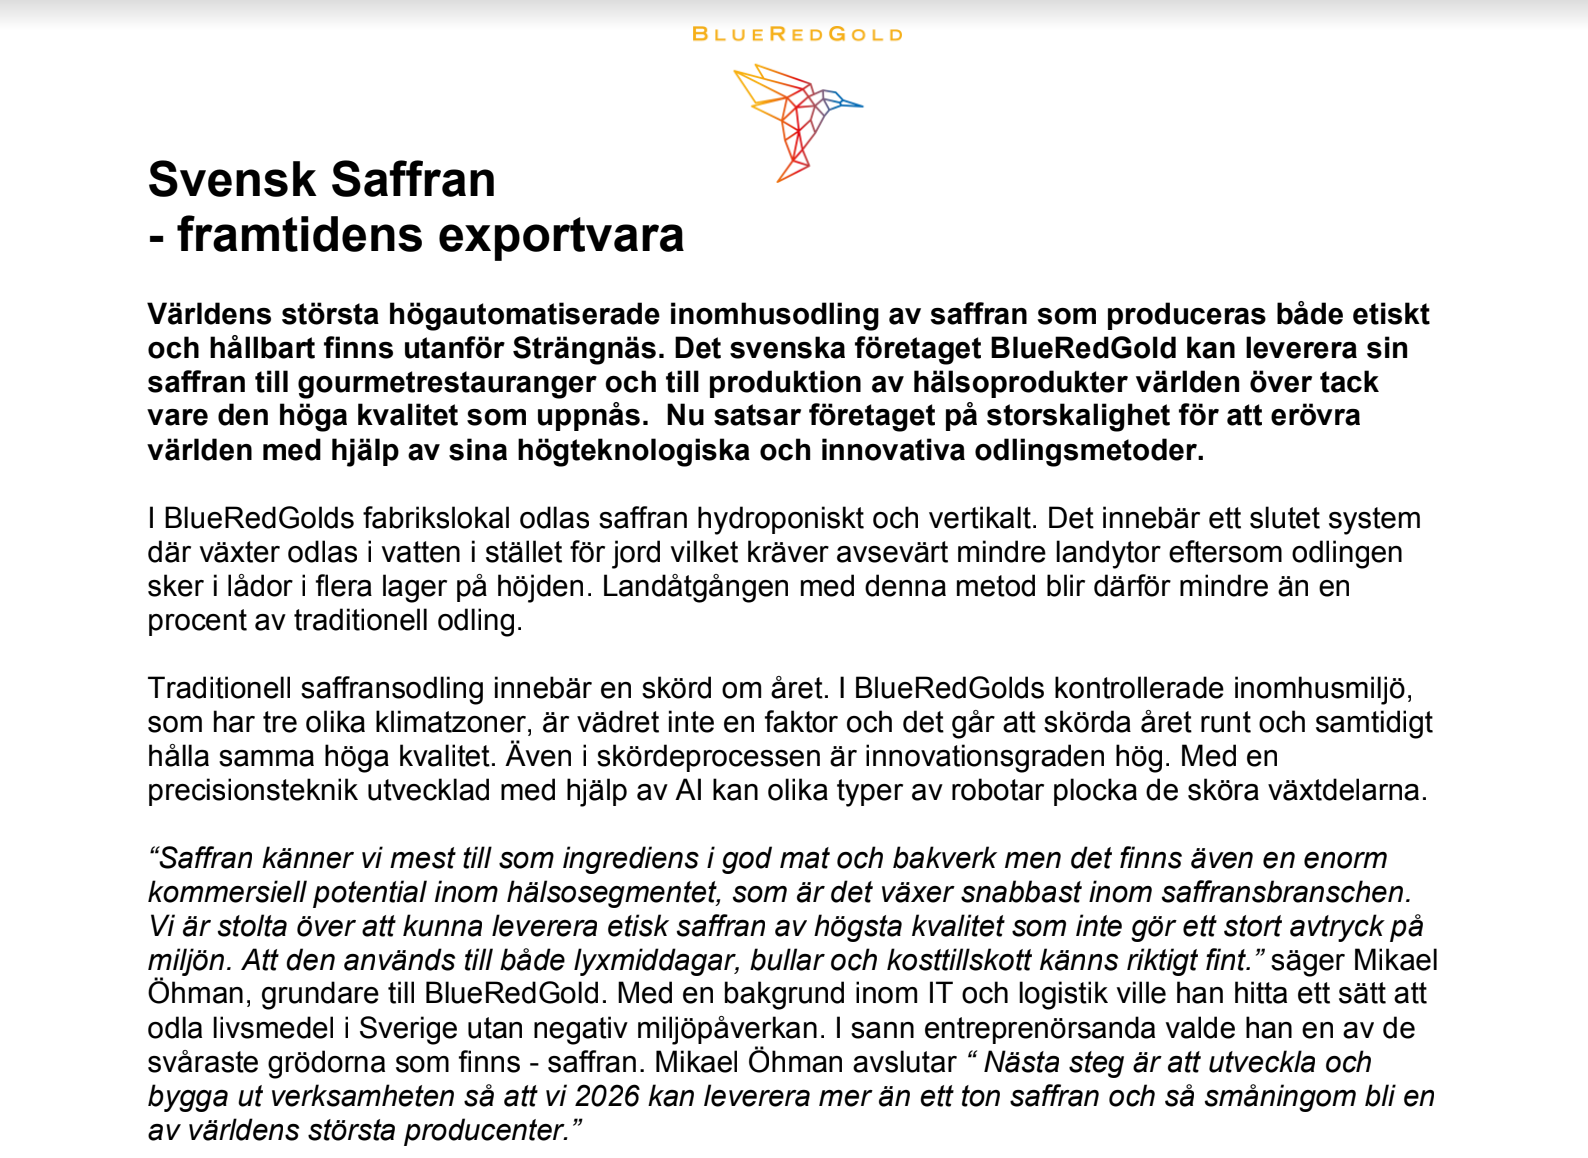 (SWE) Press release: Pioneering the future of Saffron as Sweden’s next major export